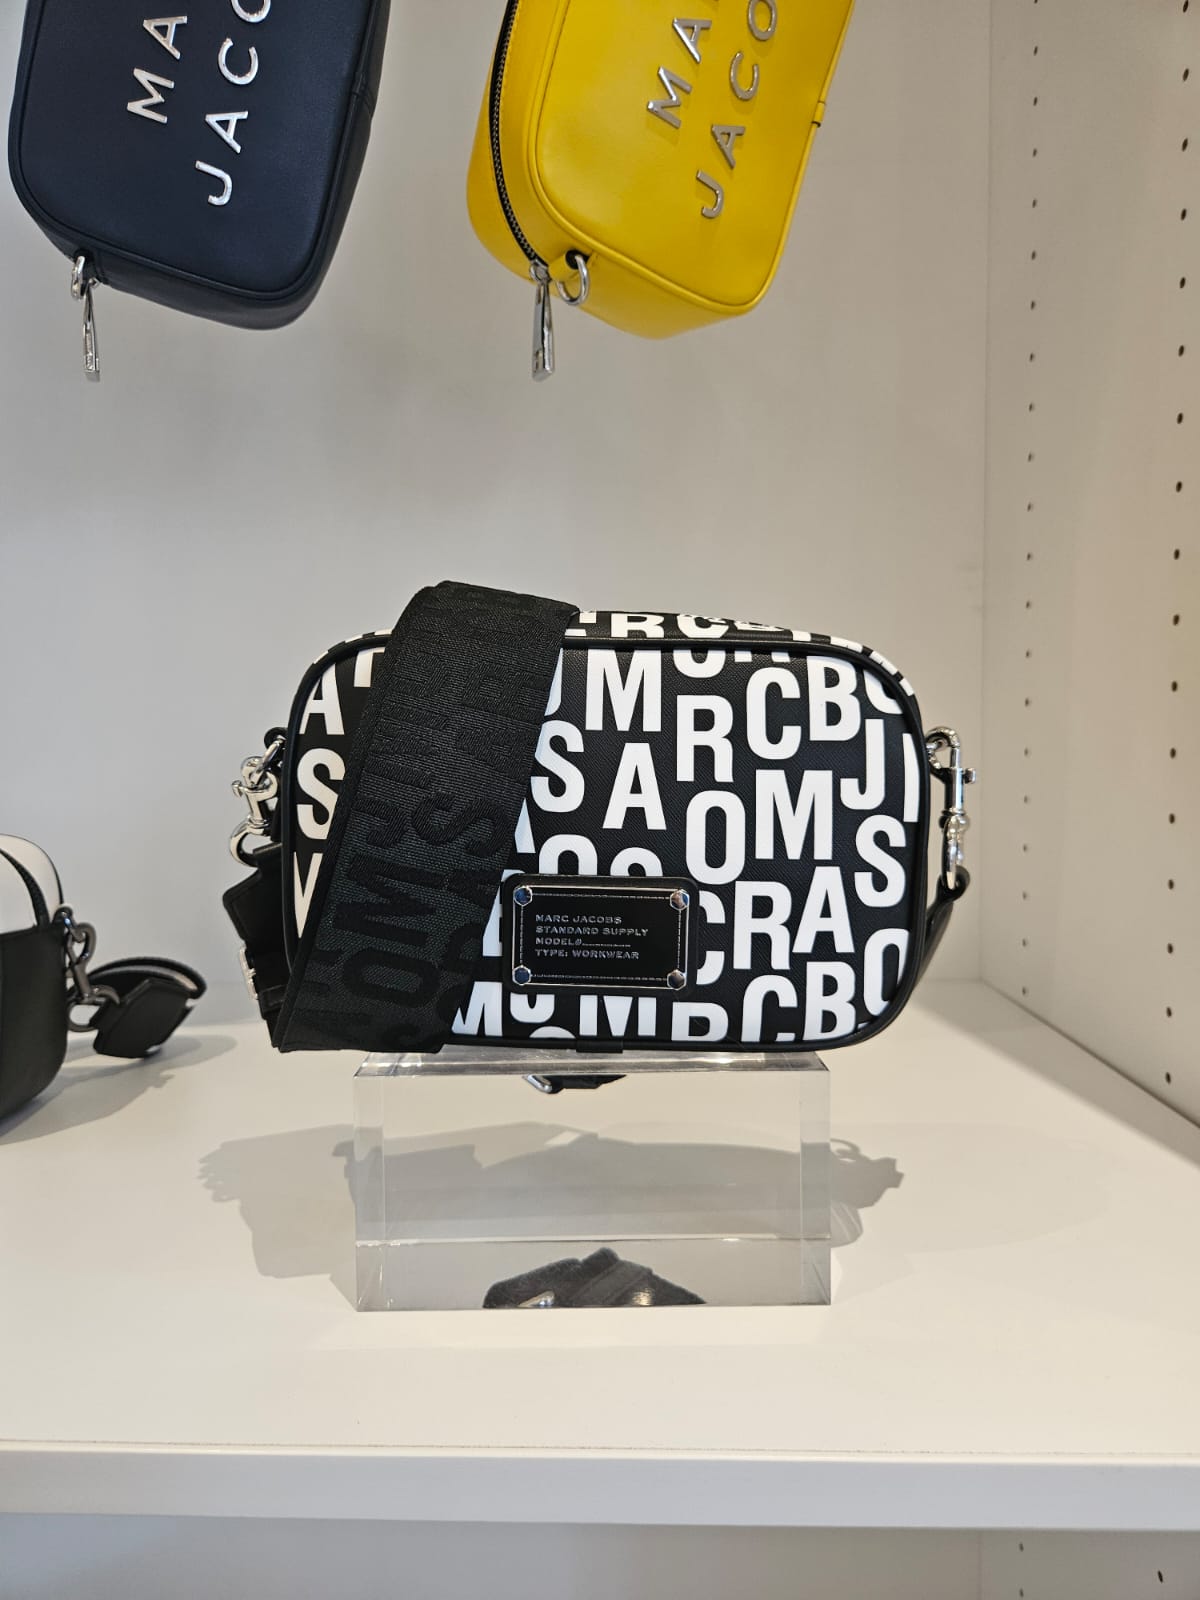 Marc Jacobs Flash Bag